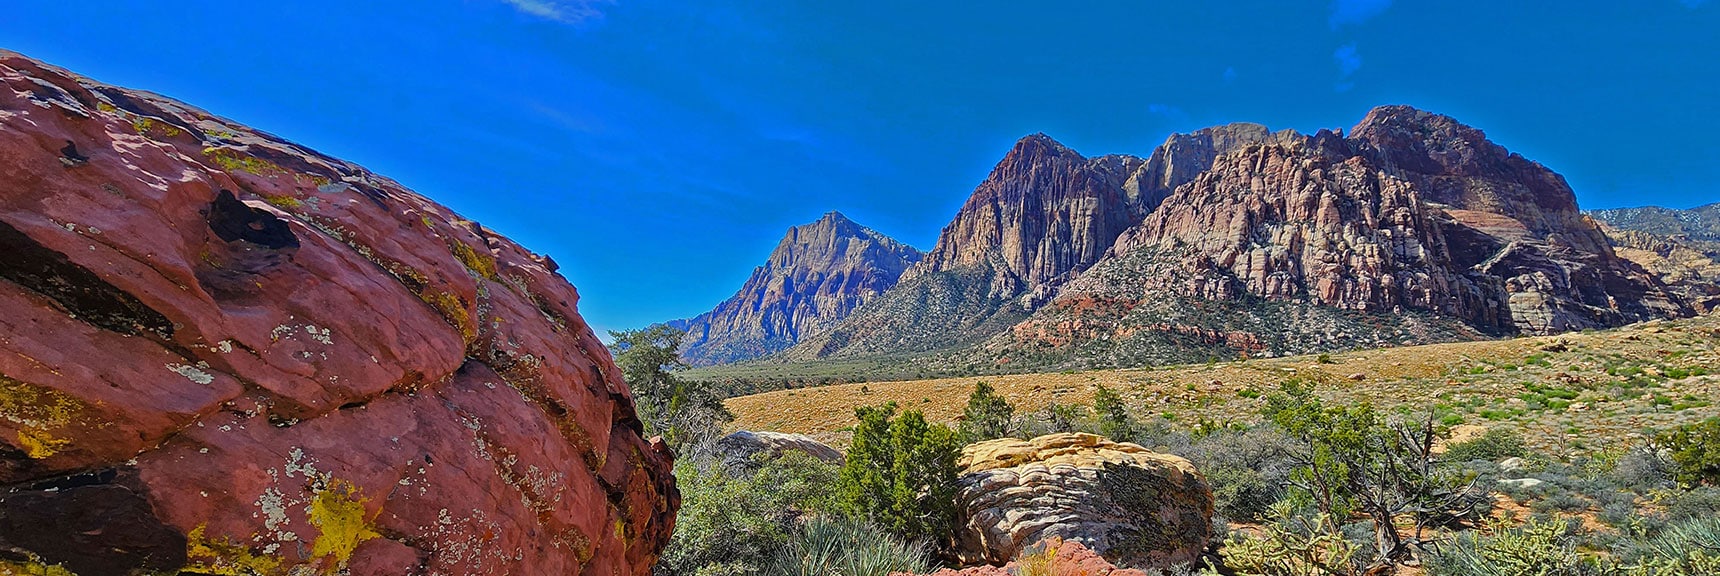 Mt. Wilson, Rainbow Mt., Juniper Peak from Artistic Boulder | Dales Trail | Red Rock Canyon National Conservation Area, Nevada | David Smith | LasVegasAreaTrails.com